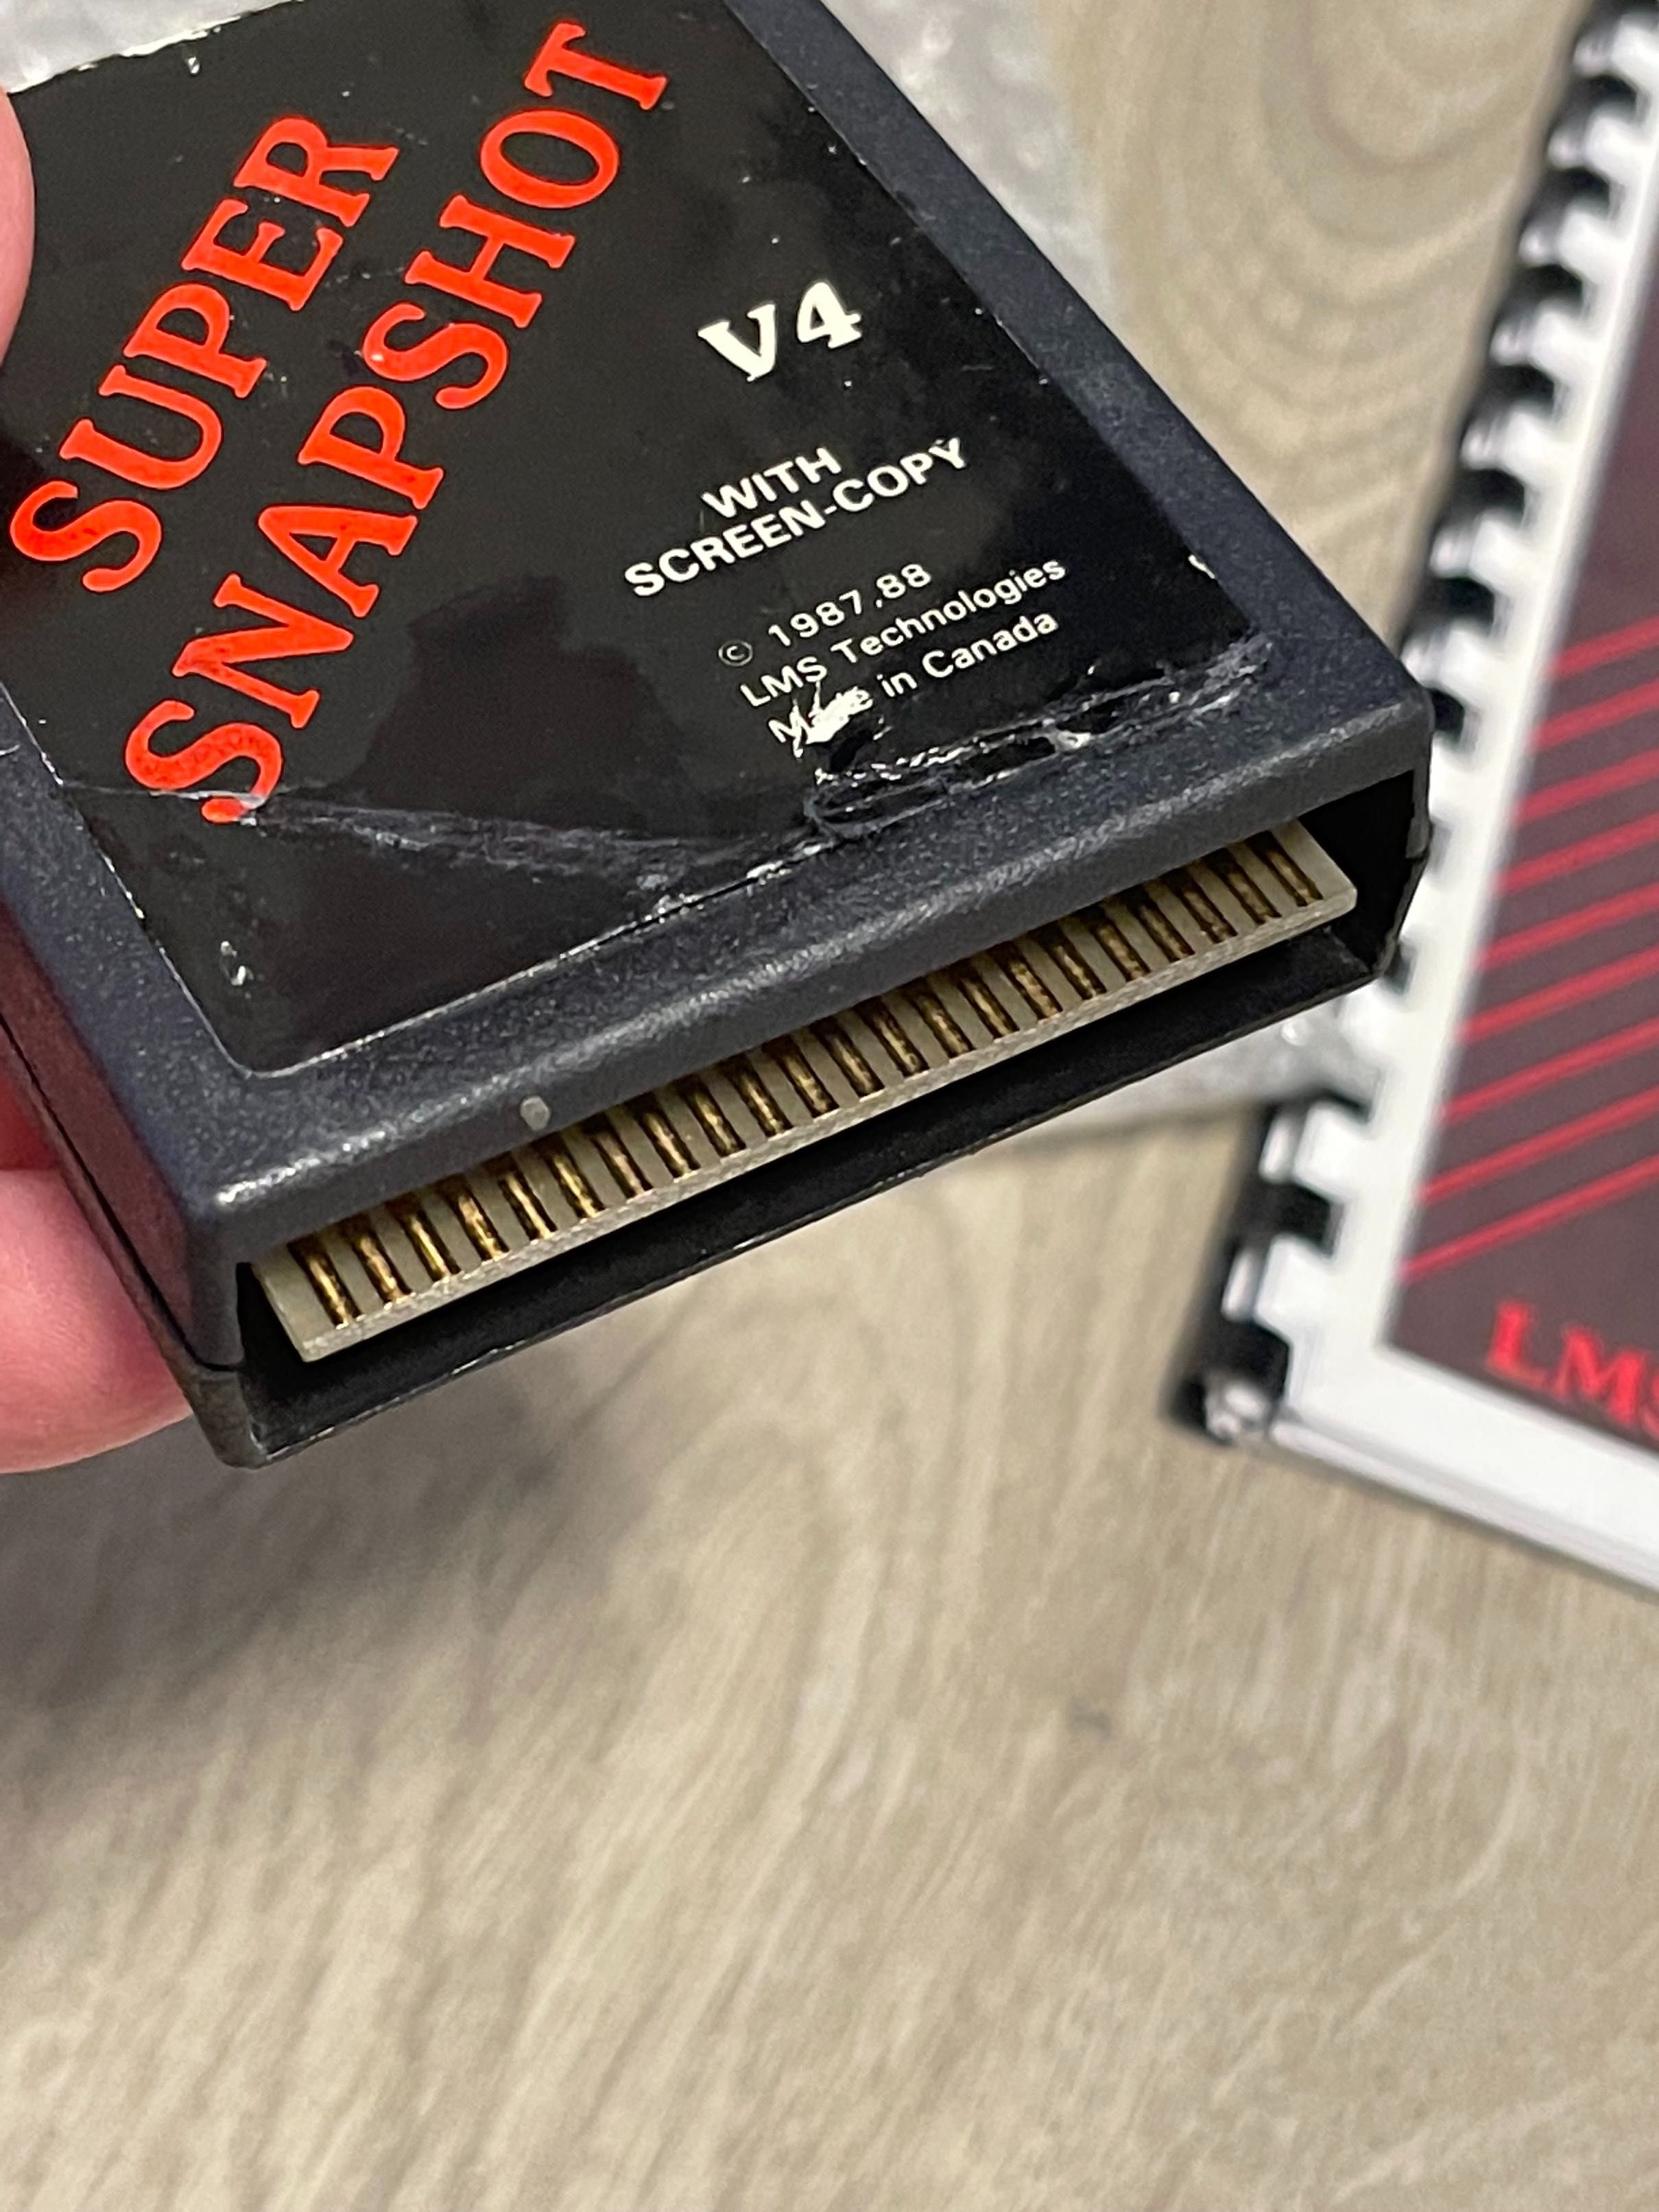 Super Snapshot V4 cartridge - pentru Commodore 64 sau 128